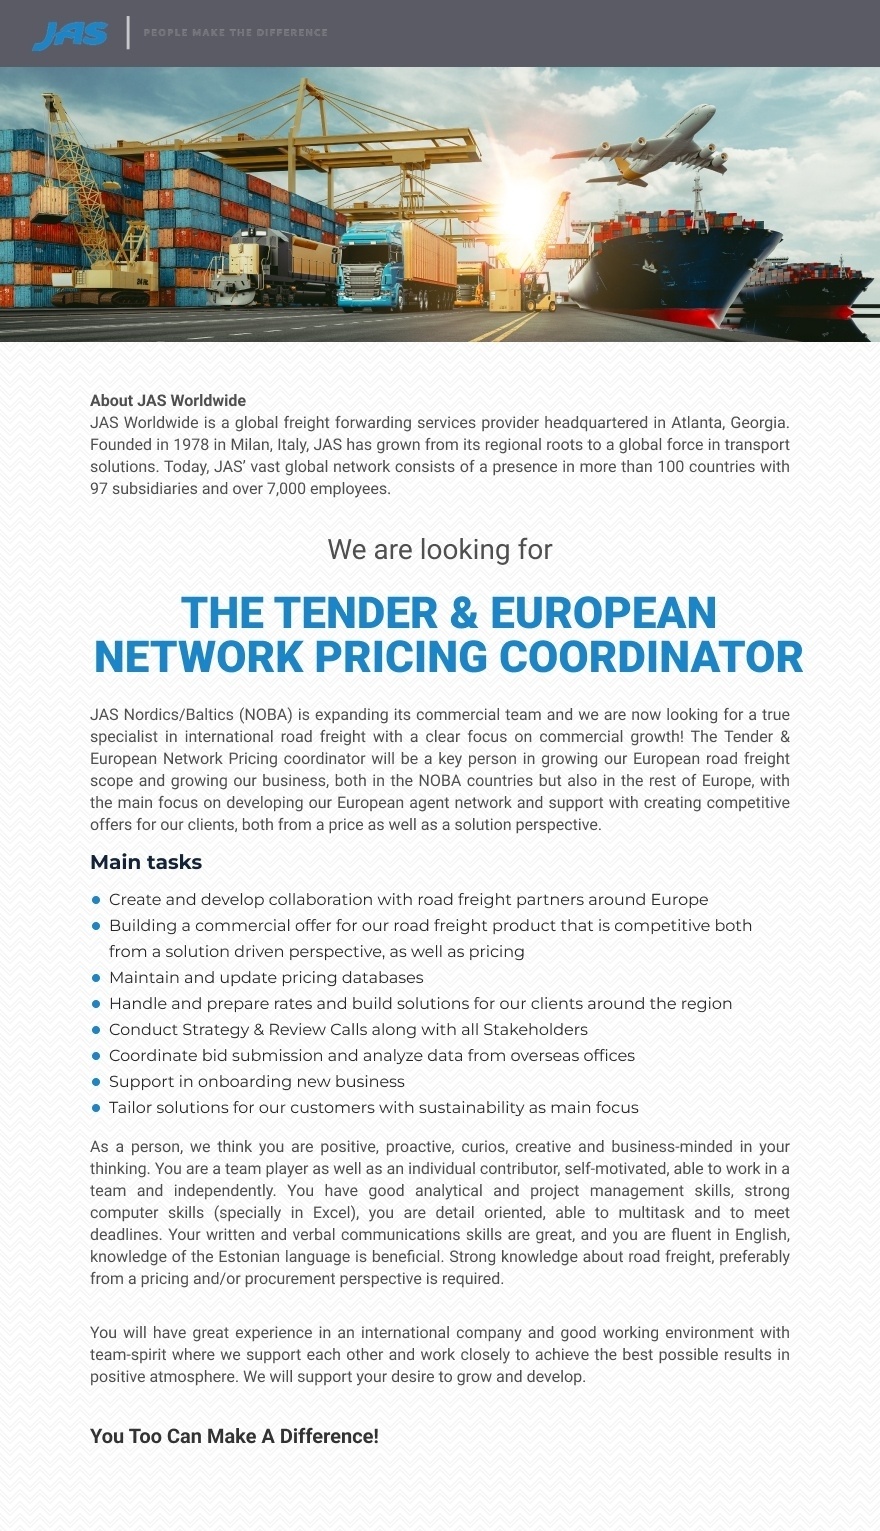 CVKeskus.ee client The Tender & European Network Pricing Coordinator